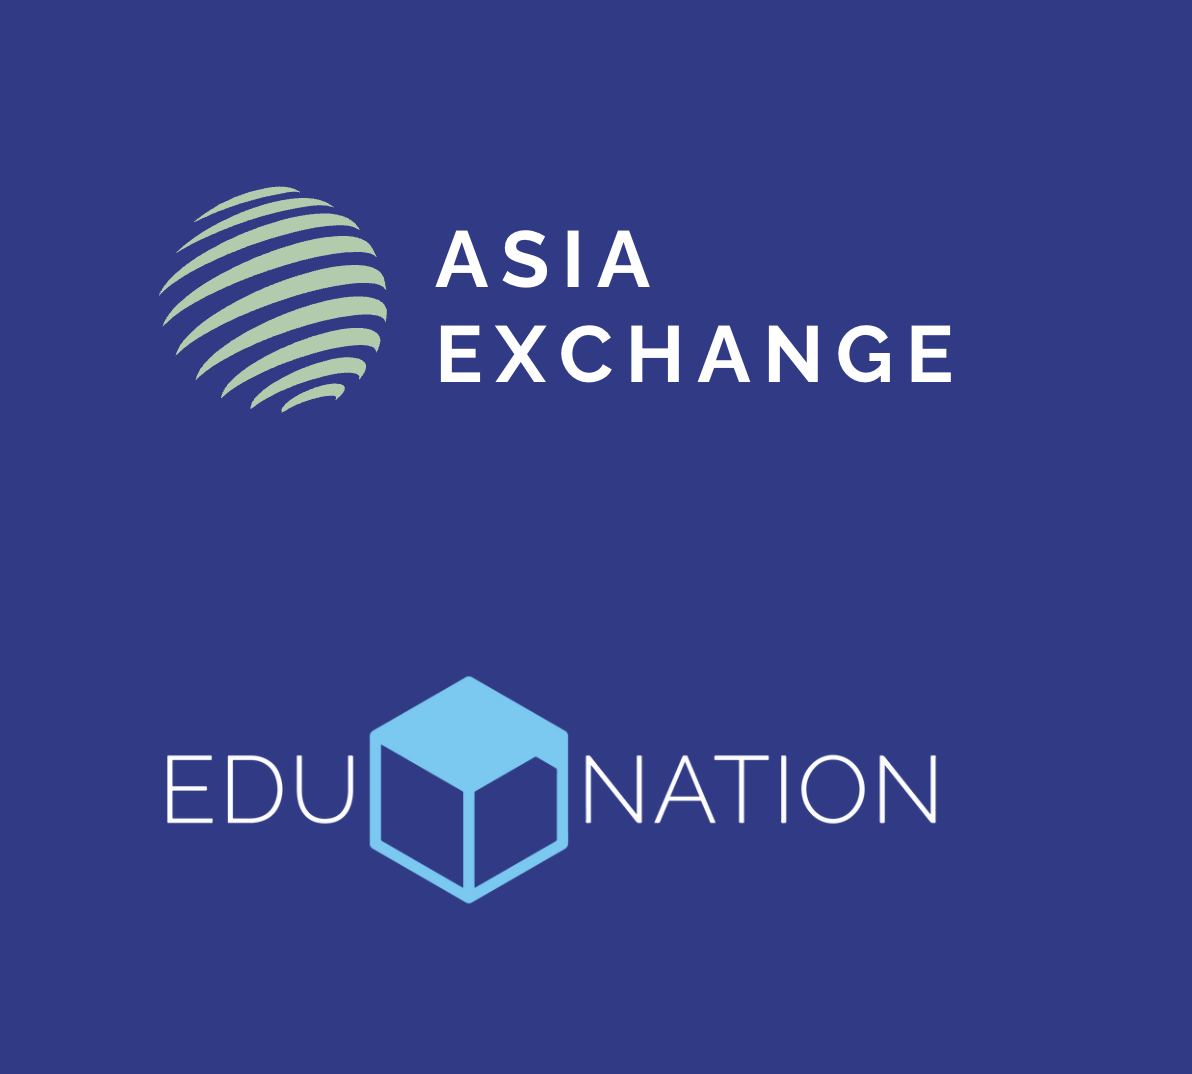 Keystone Acquires Asia Exchange and Edunation